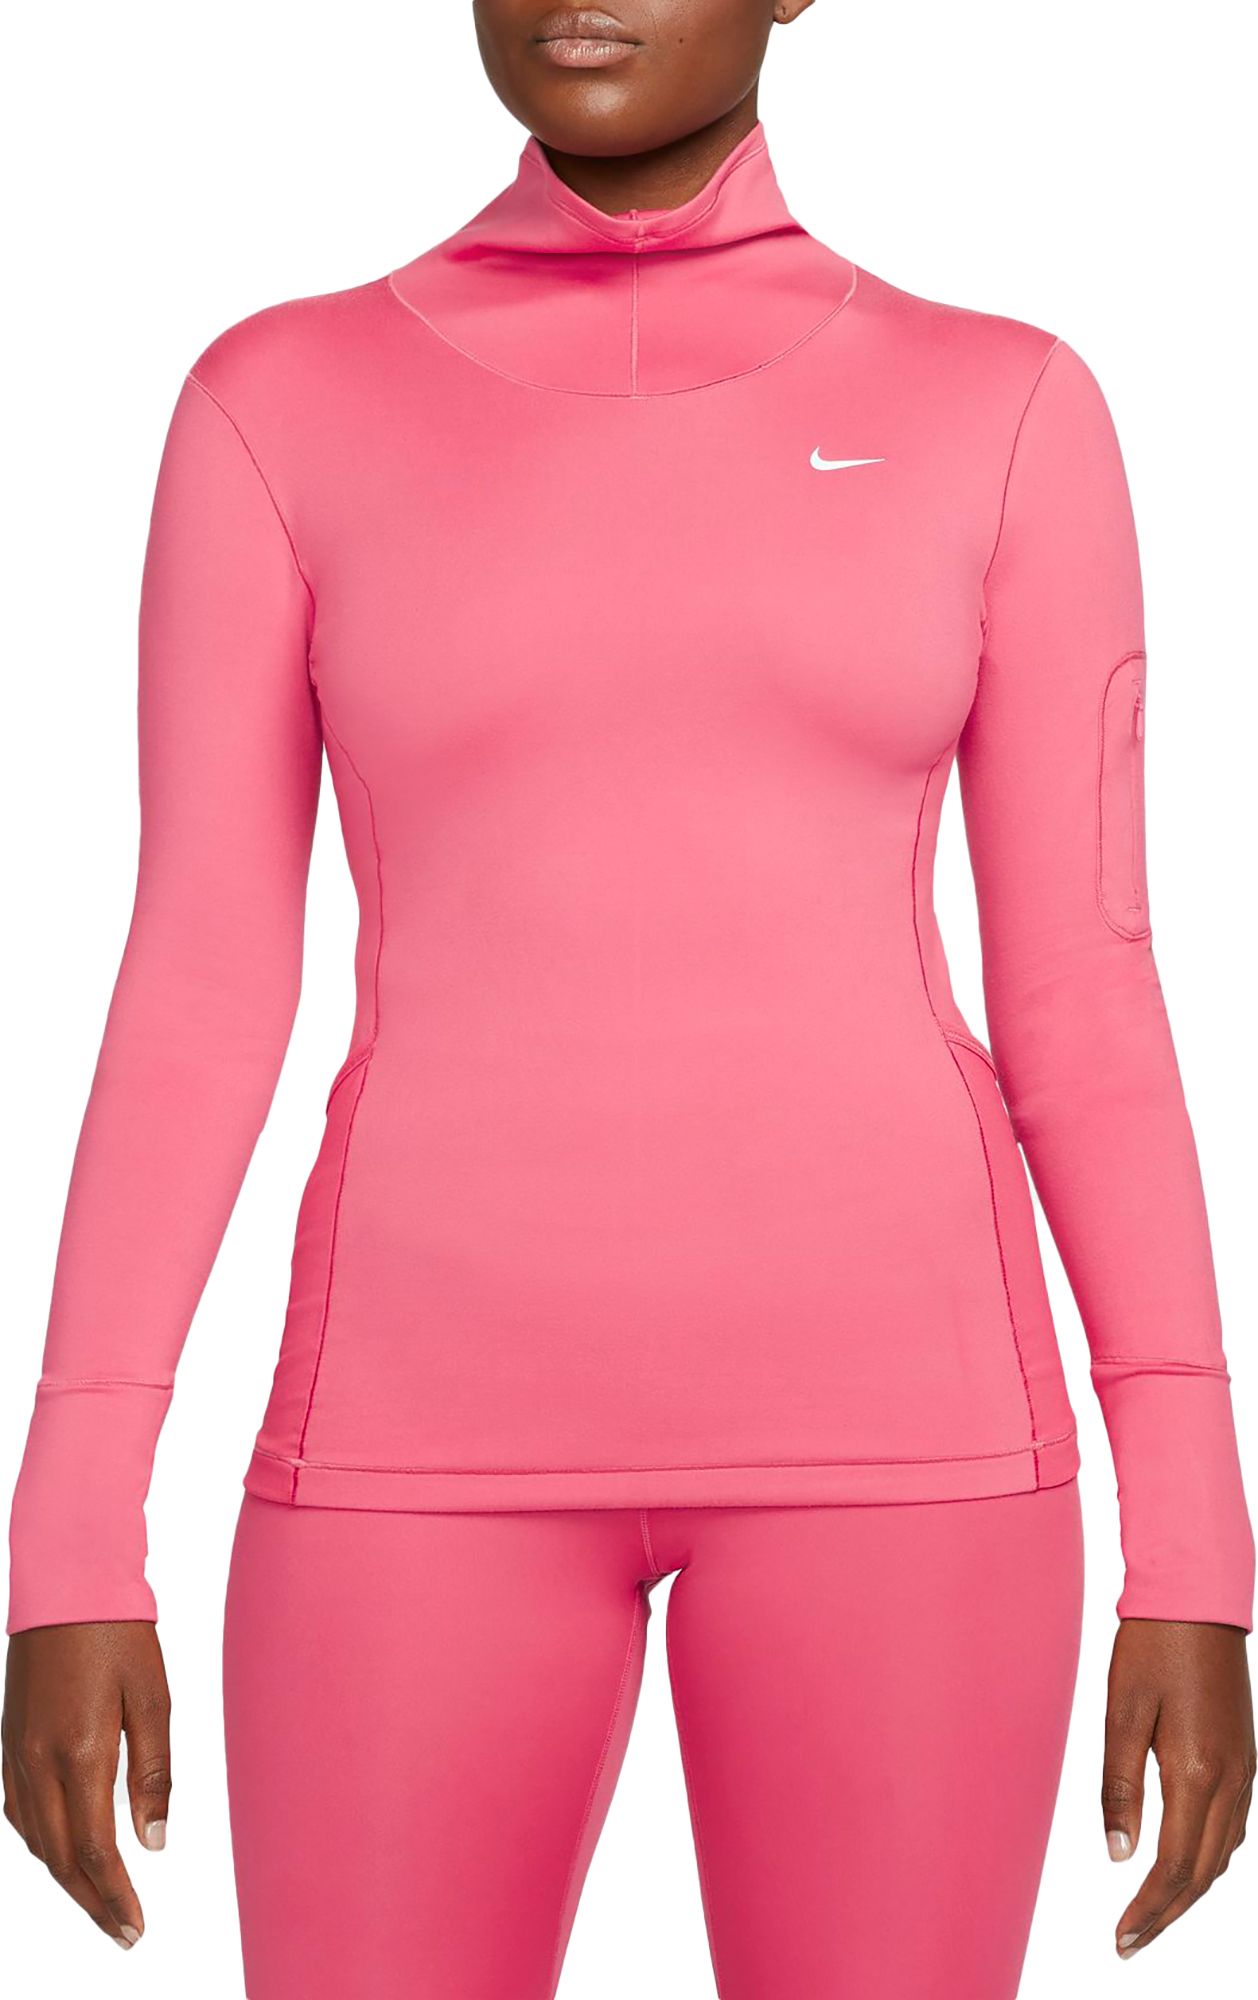 panel Rosefarve klasselærer Nike / Women's Therma-FIT Pro Warm Scoop Neck Long Sleeve Top